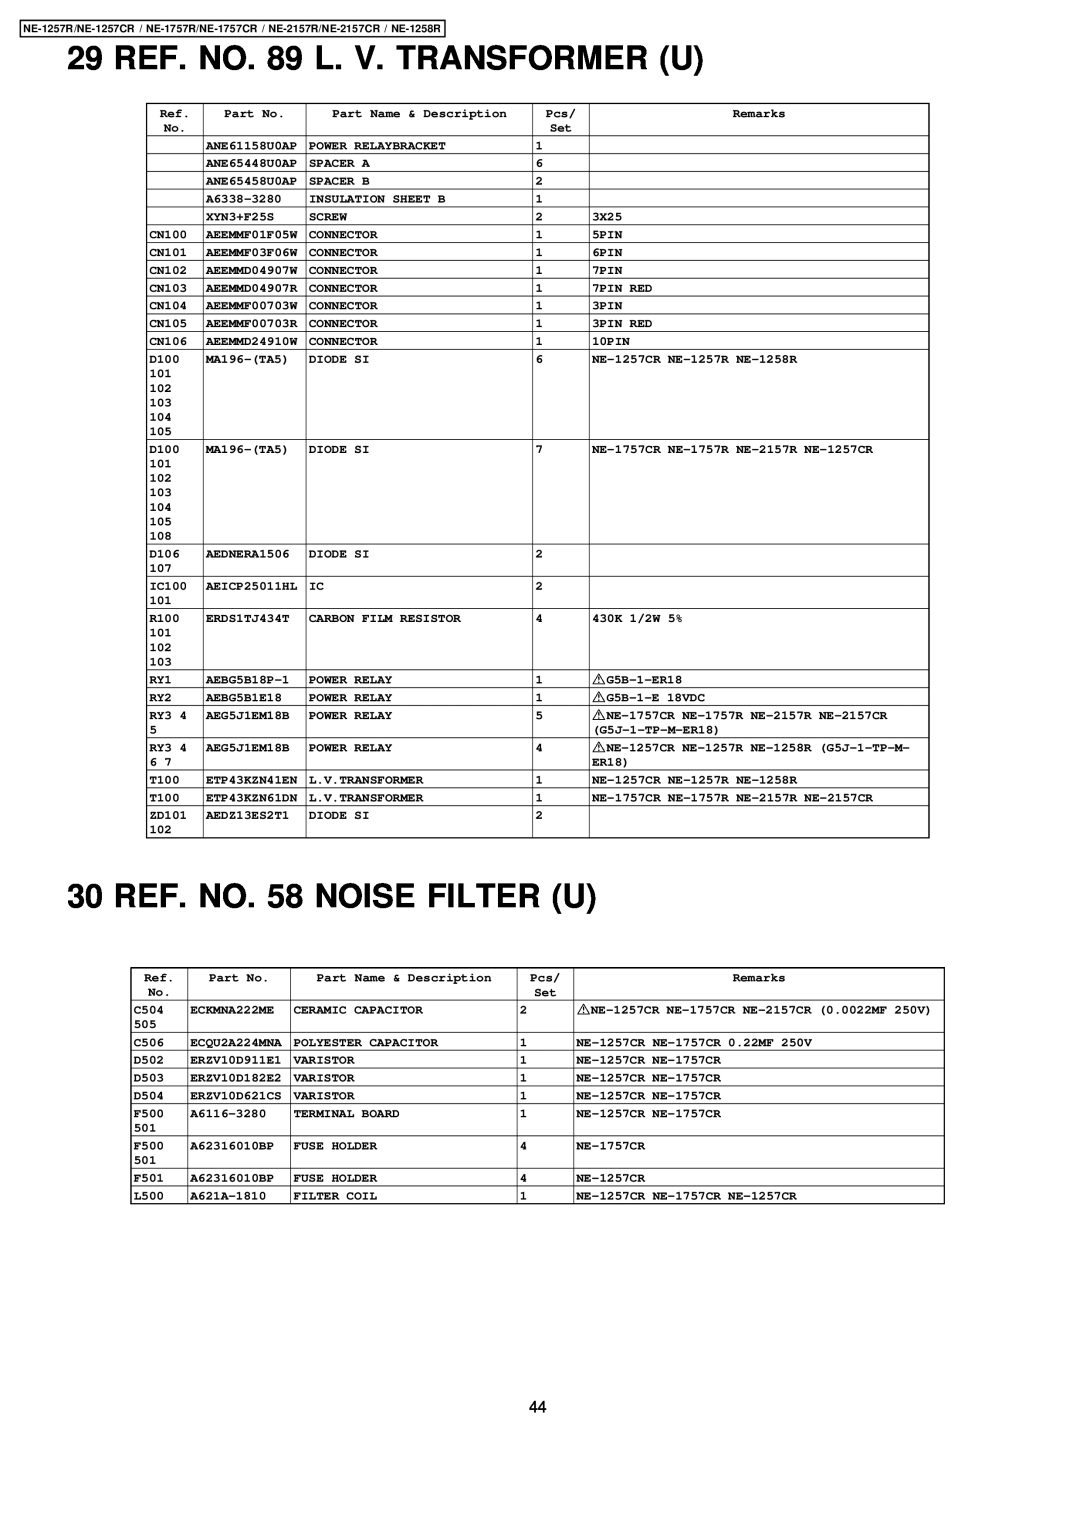 Panasonic NE-1257CR, NE-2157CR, NE-1757CR manual 29 REF. NO. 89 L. V. TRANSFORMER U, 30 REF. NO. 58 NOISE FILTER U 